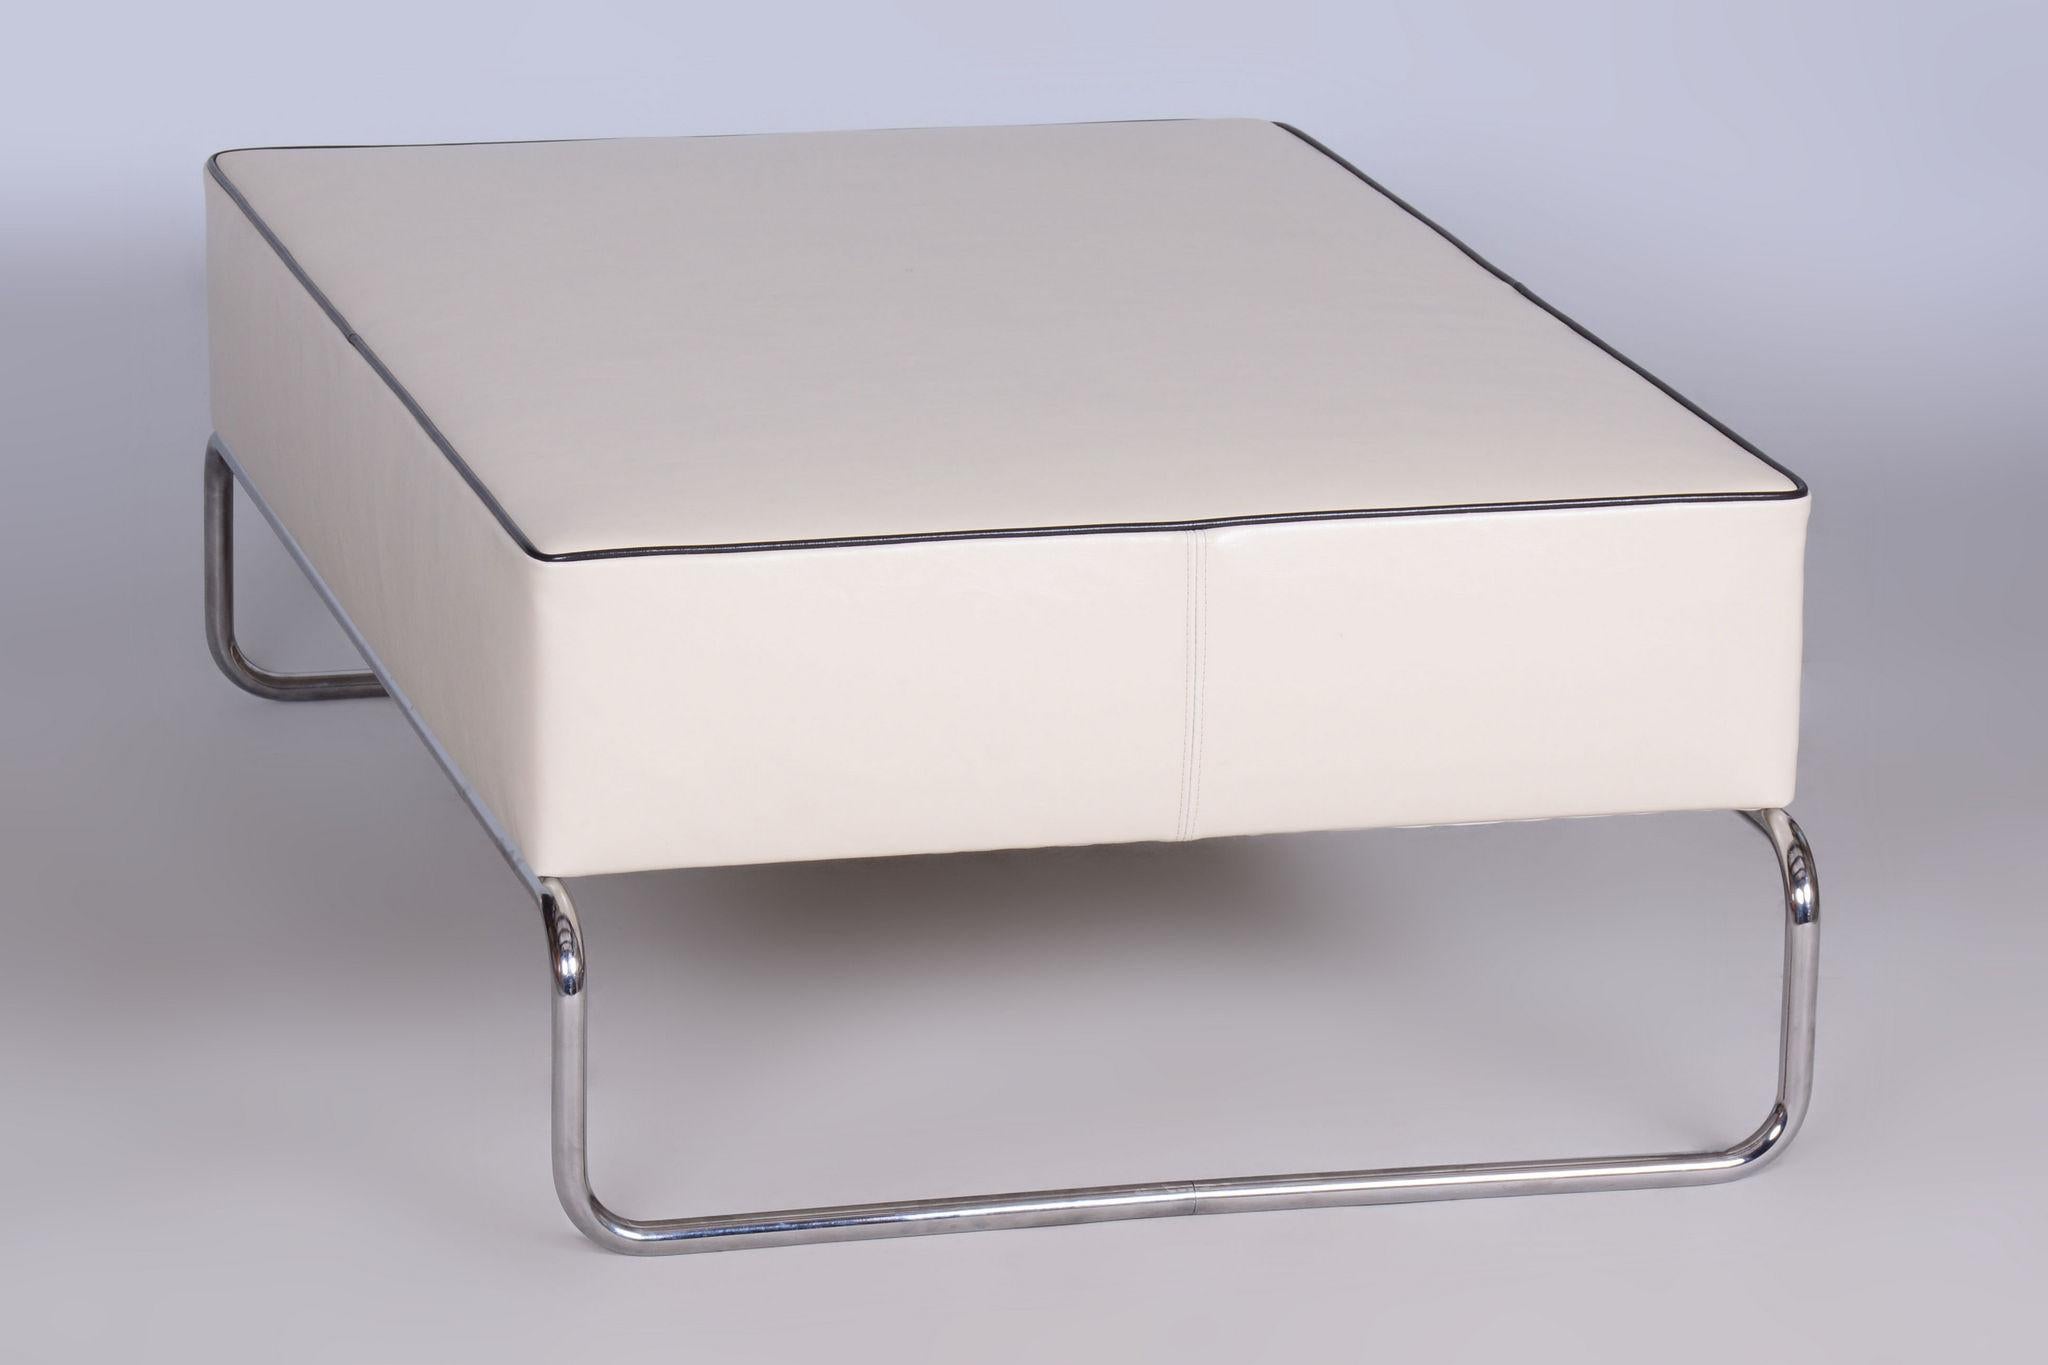 Mid-20th Century Restored Bauhaus Stool-Table, Chrome Steel, New Upholstery, Czechia, 1930s For Sale